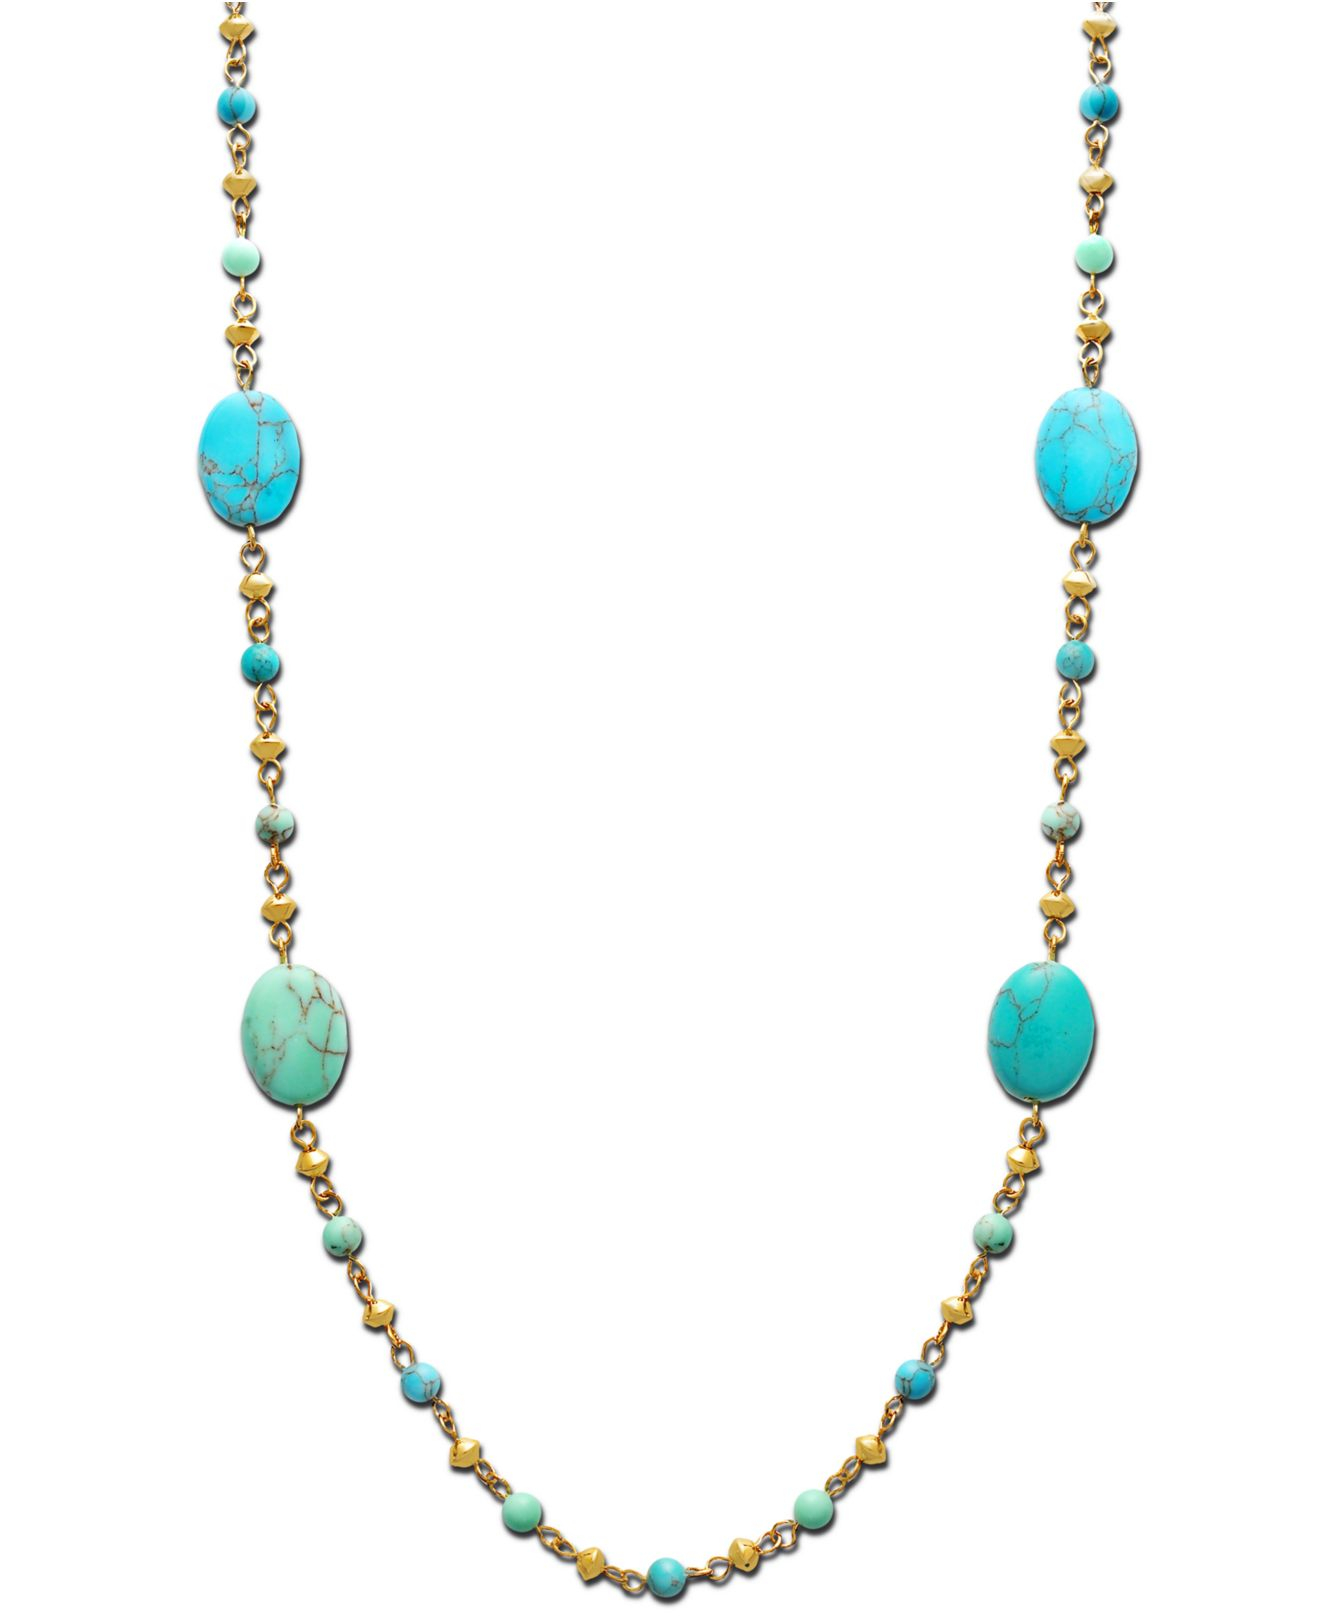 Ralph Lauren Jewelry Turquoise - SIS 